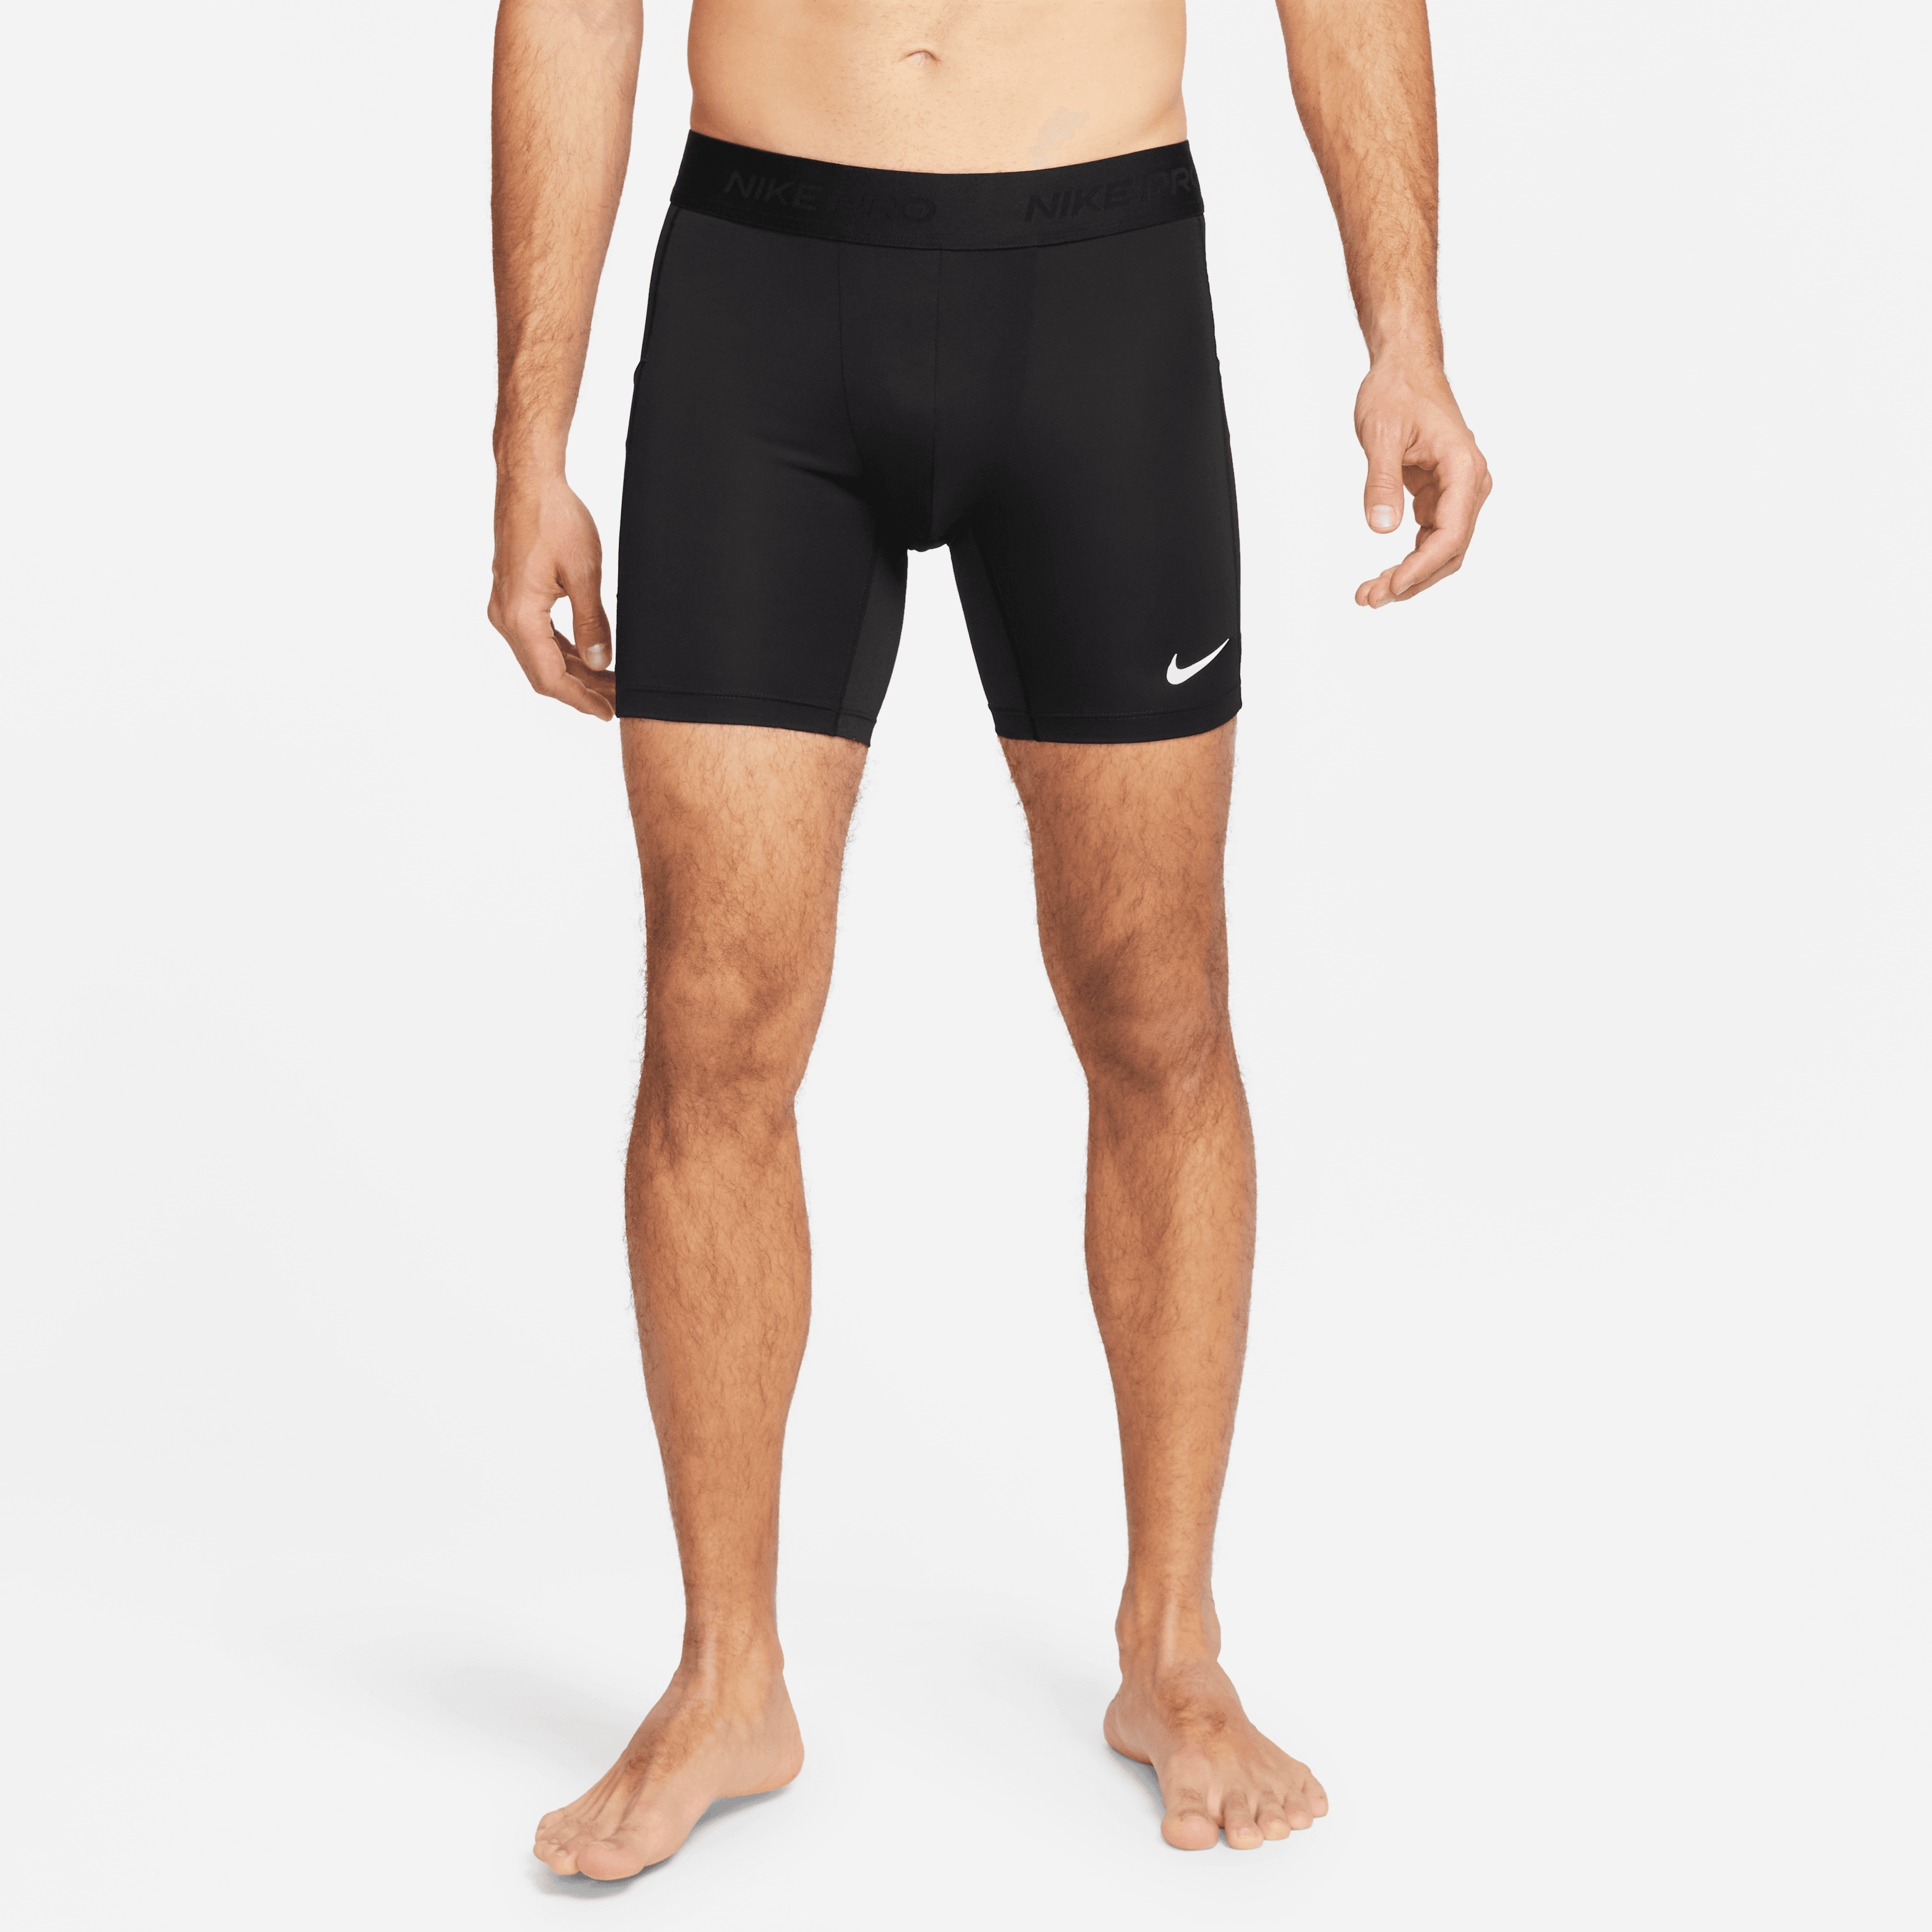 Nike Compression Pro Dri-FIT Men's Shorts-Black